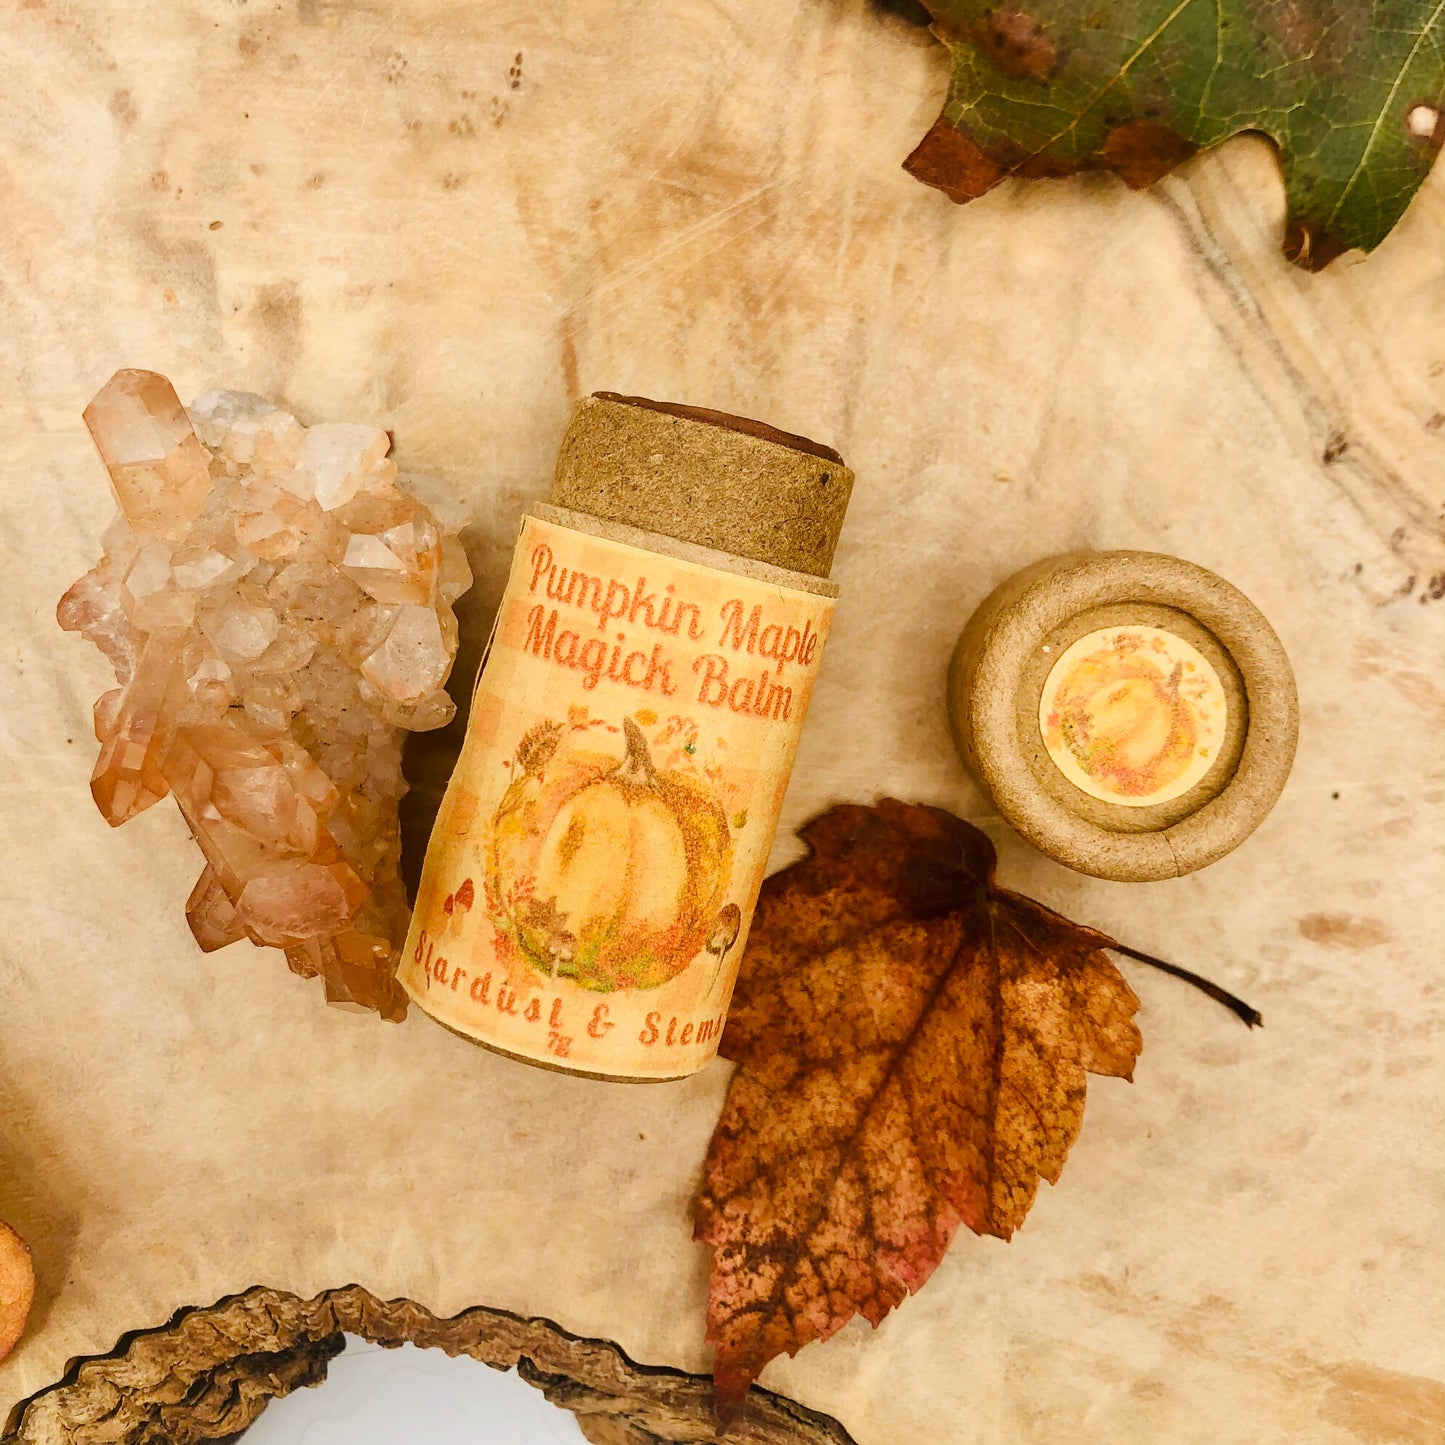 Handmade Pumpkin Spice and Maple Magick: Cozy Fall Lip Balm with Pumpkin Oil, Cinnamon, Clove, Nutmeg, Ginger and Real 24K Gold